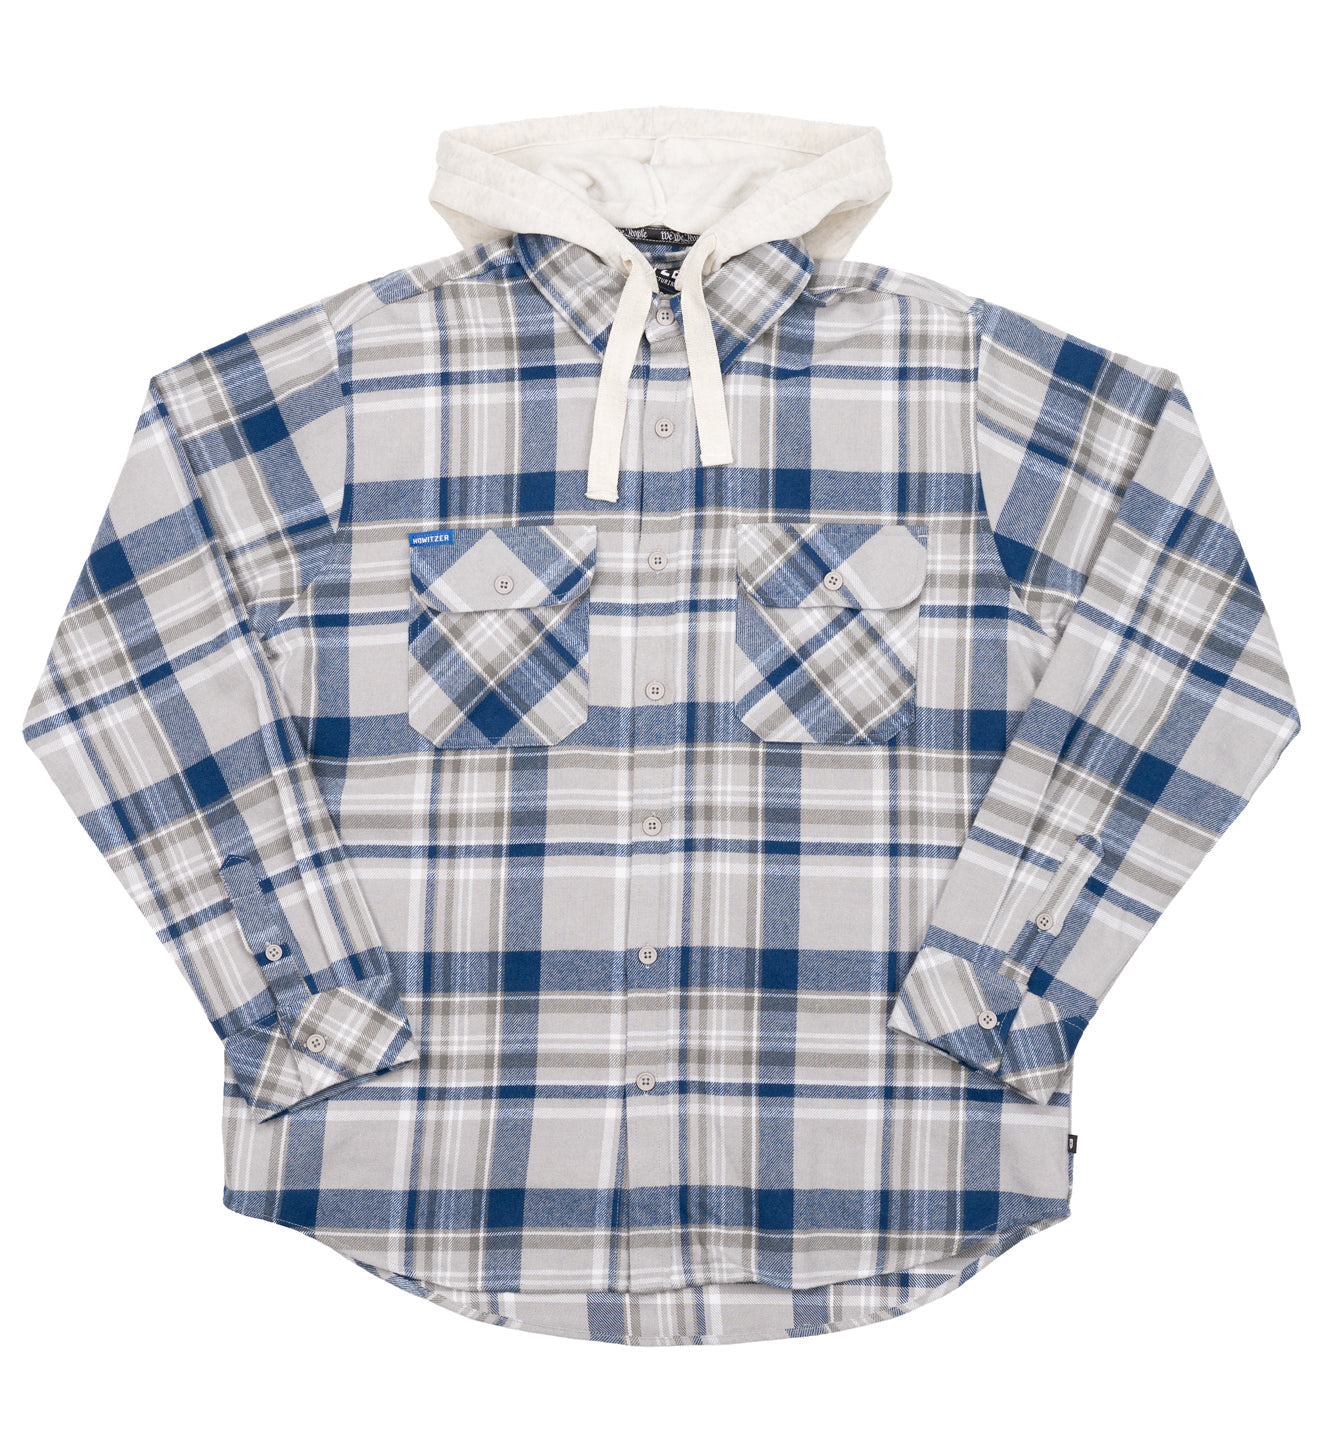 Mens Hooded Sweatshirts - Argonne